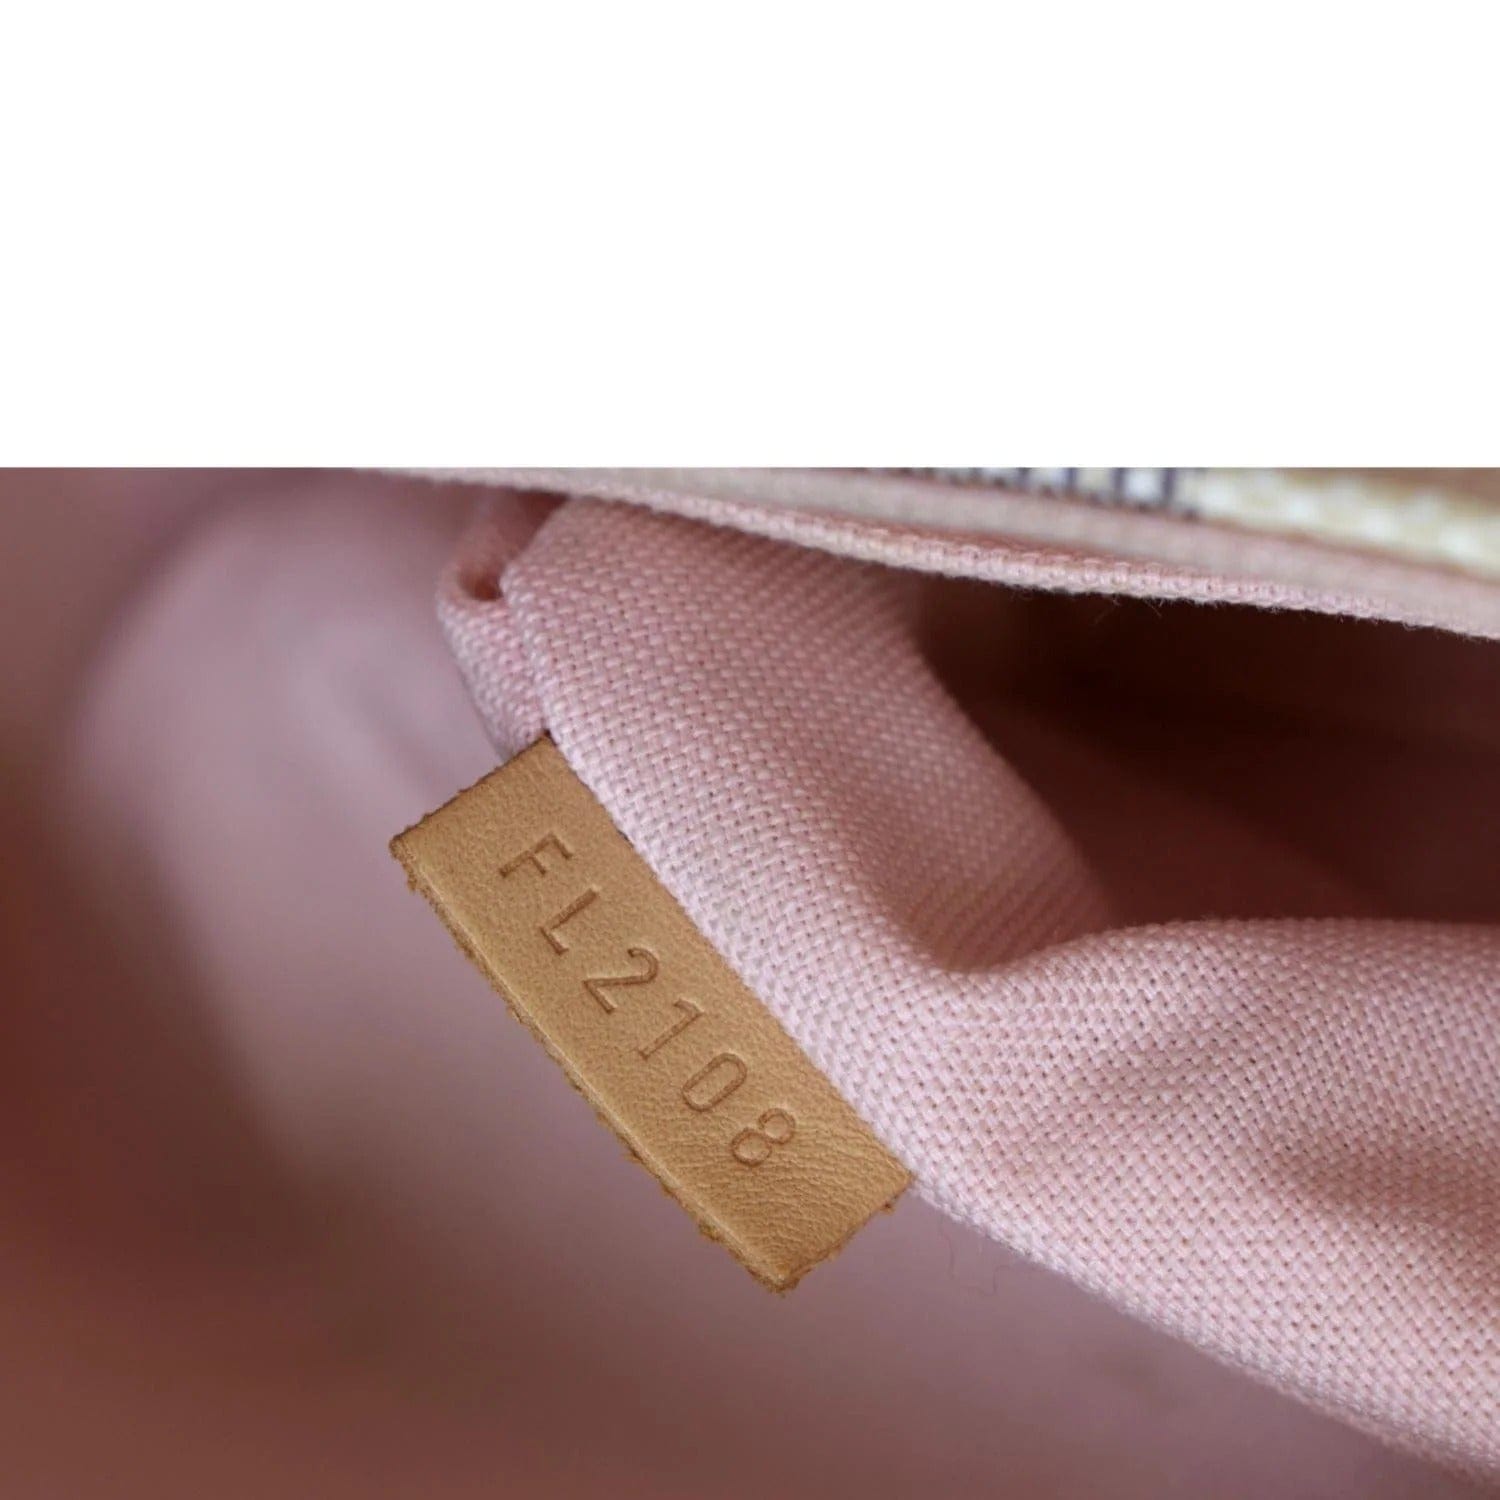 Louis Vuitton Croisette – thedesignercouple